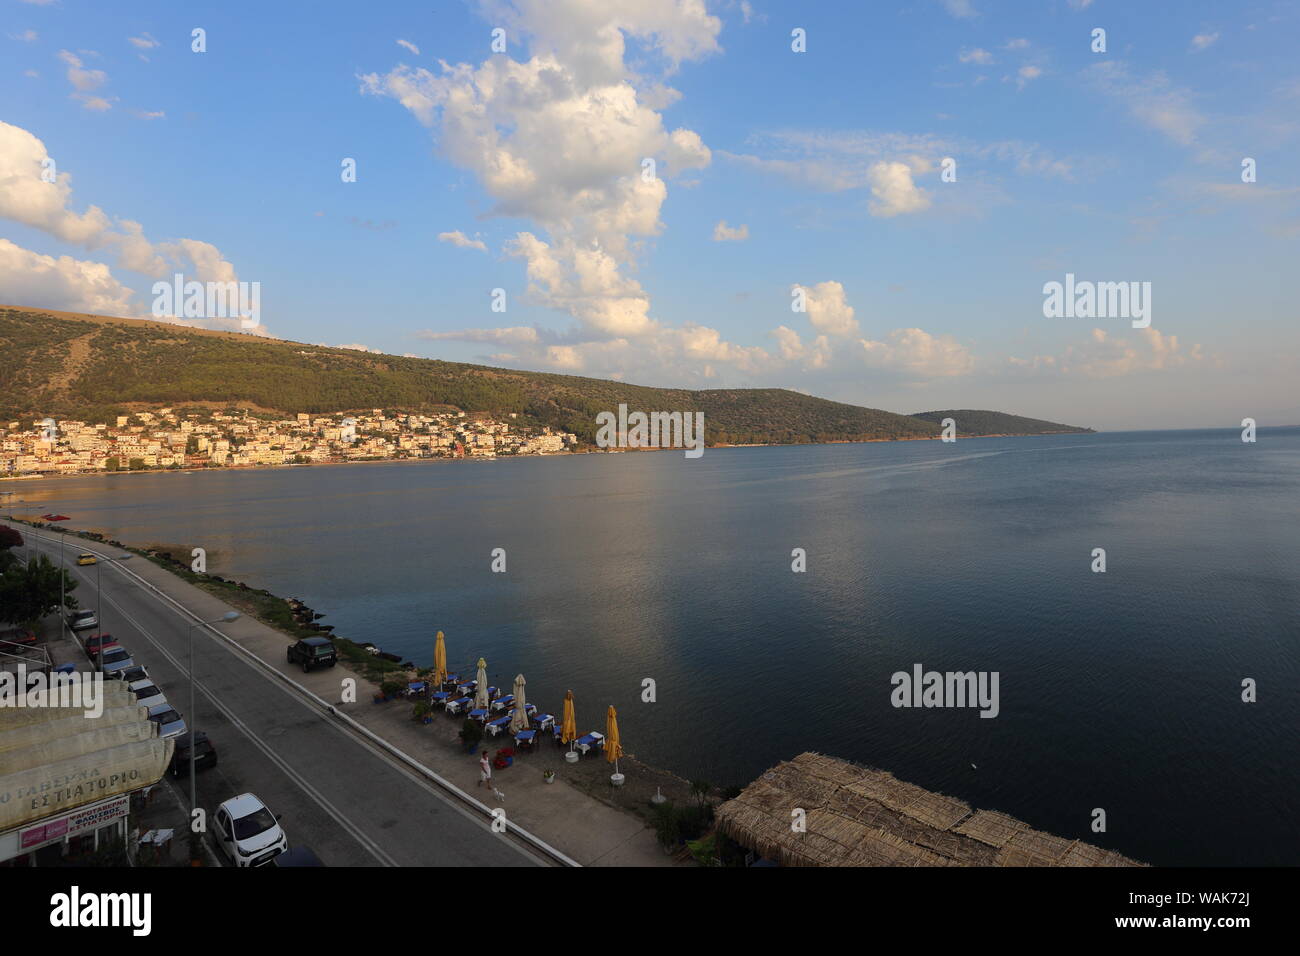 Amfilochia, Greece - 26 July 2019: The city of Amfilochia in the outskirts of western Greece Stock Photo